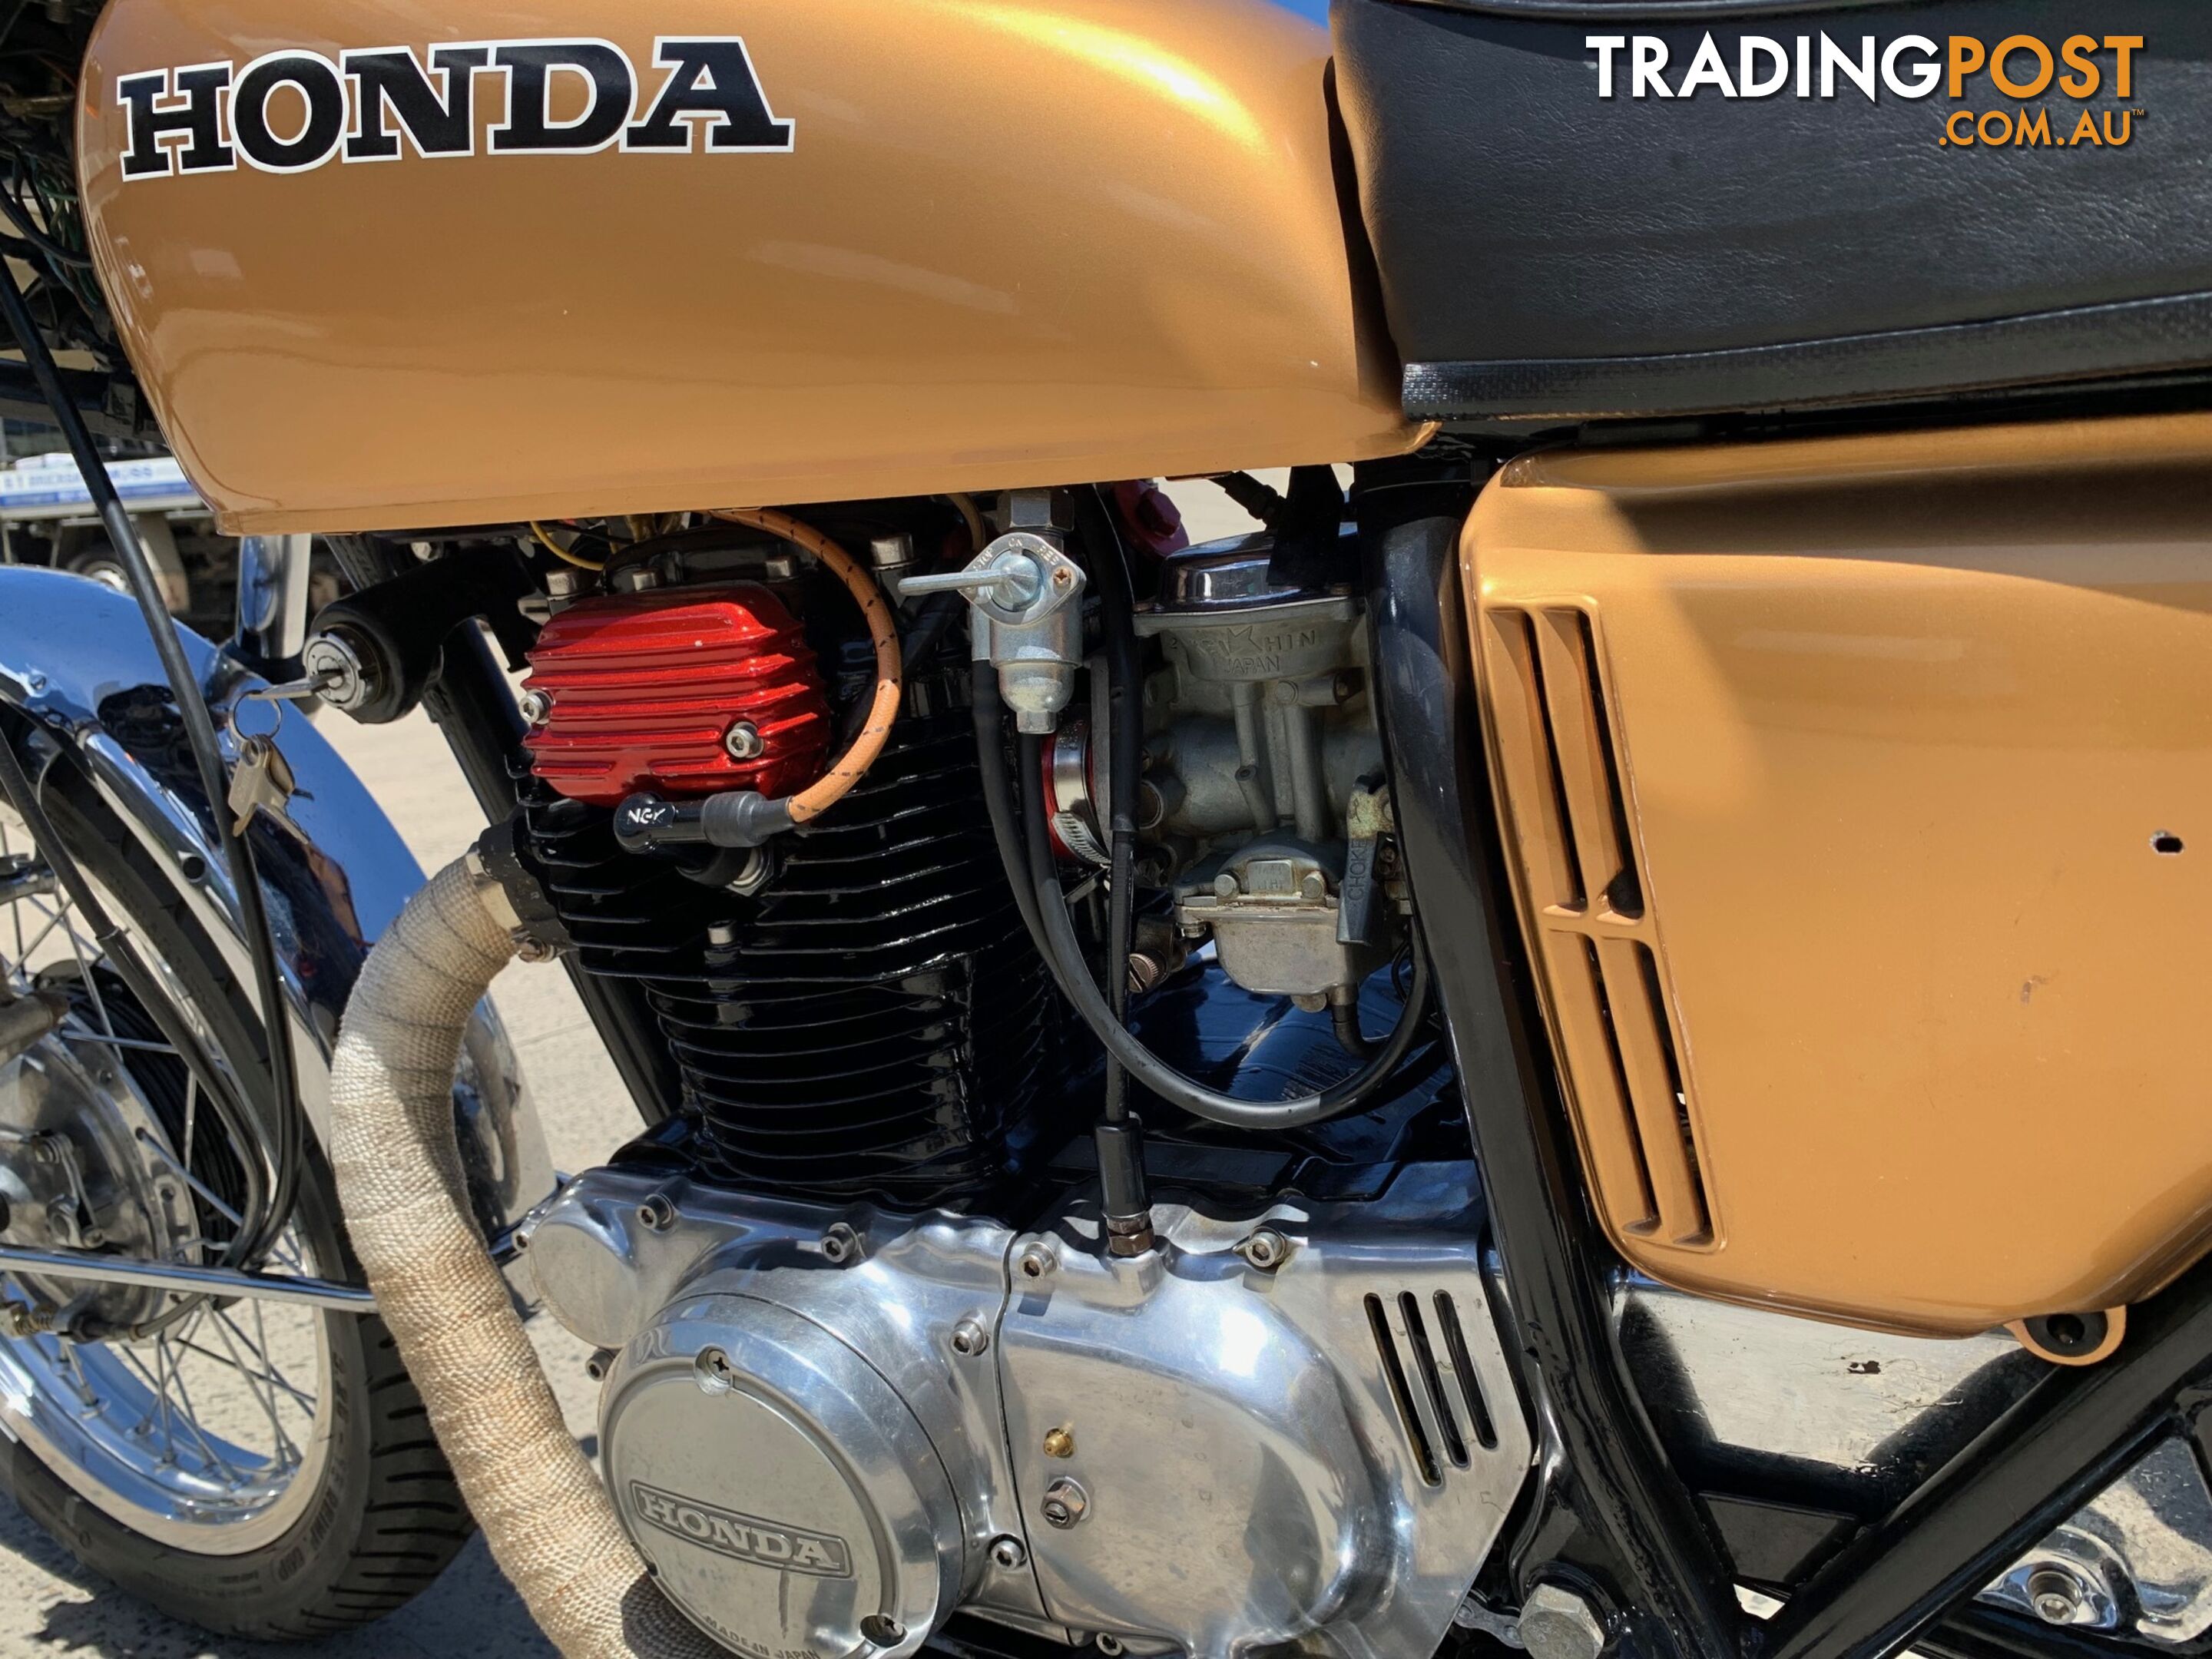 1975 Honda CB250 (NightHawk/Dream/SuperSport) 